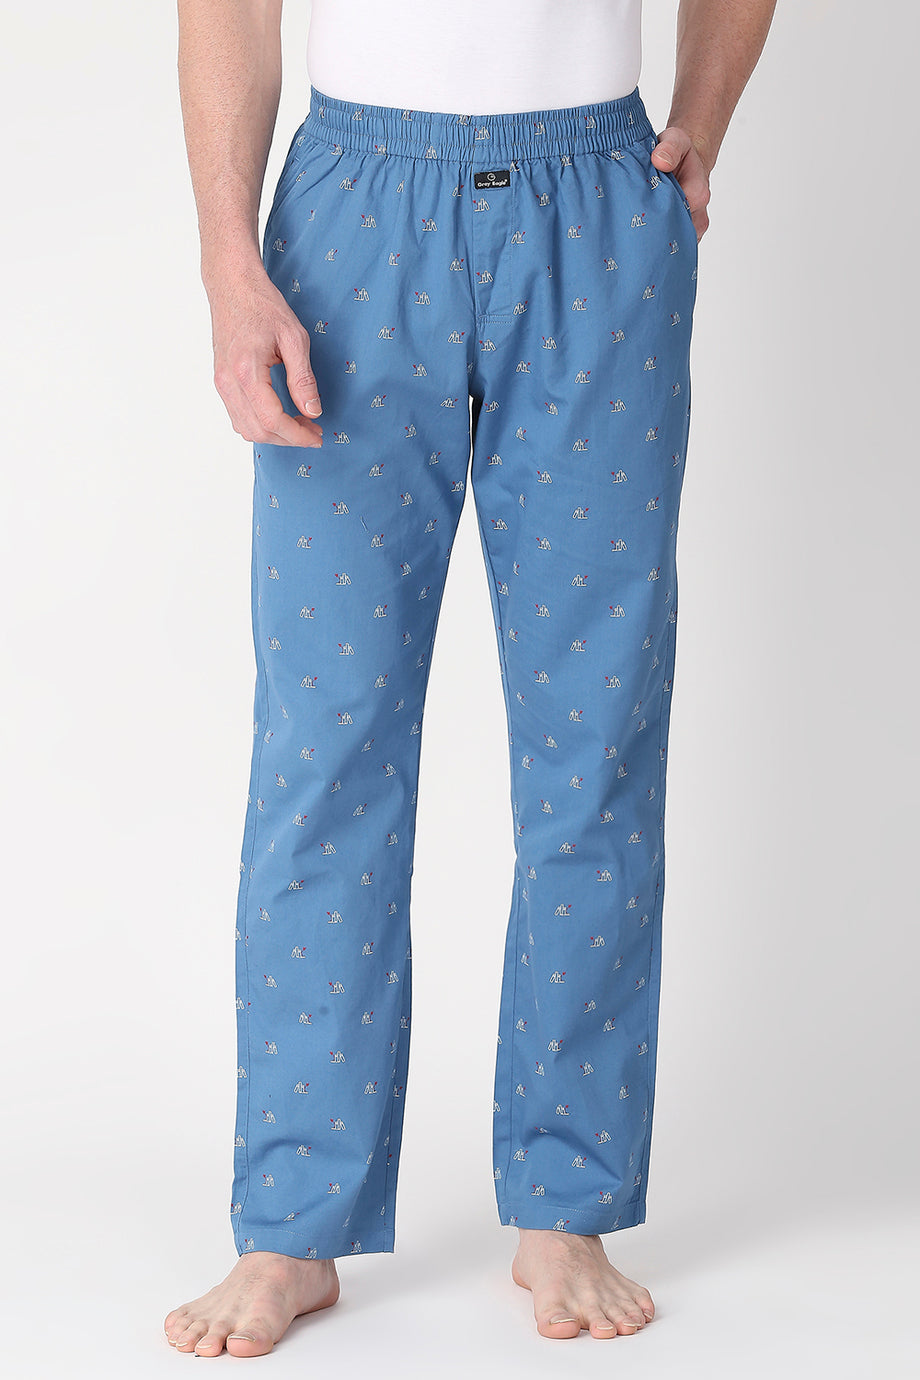 Buy Pajama Short Sleeves With Long Pants online | Lazada.com.ph